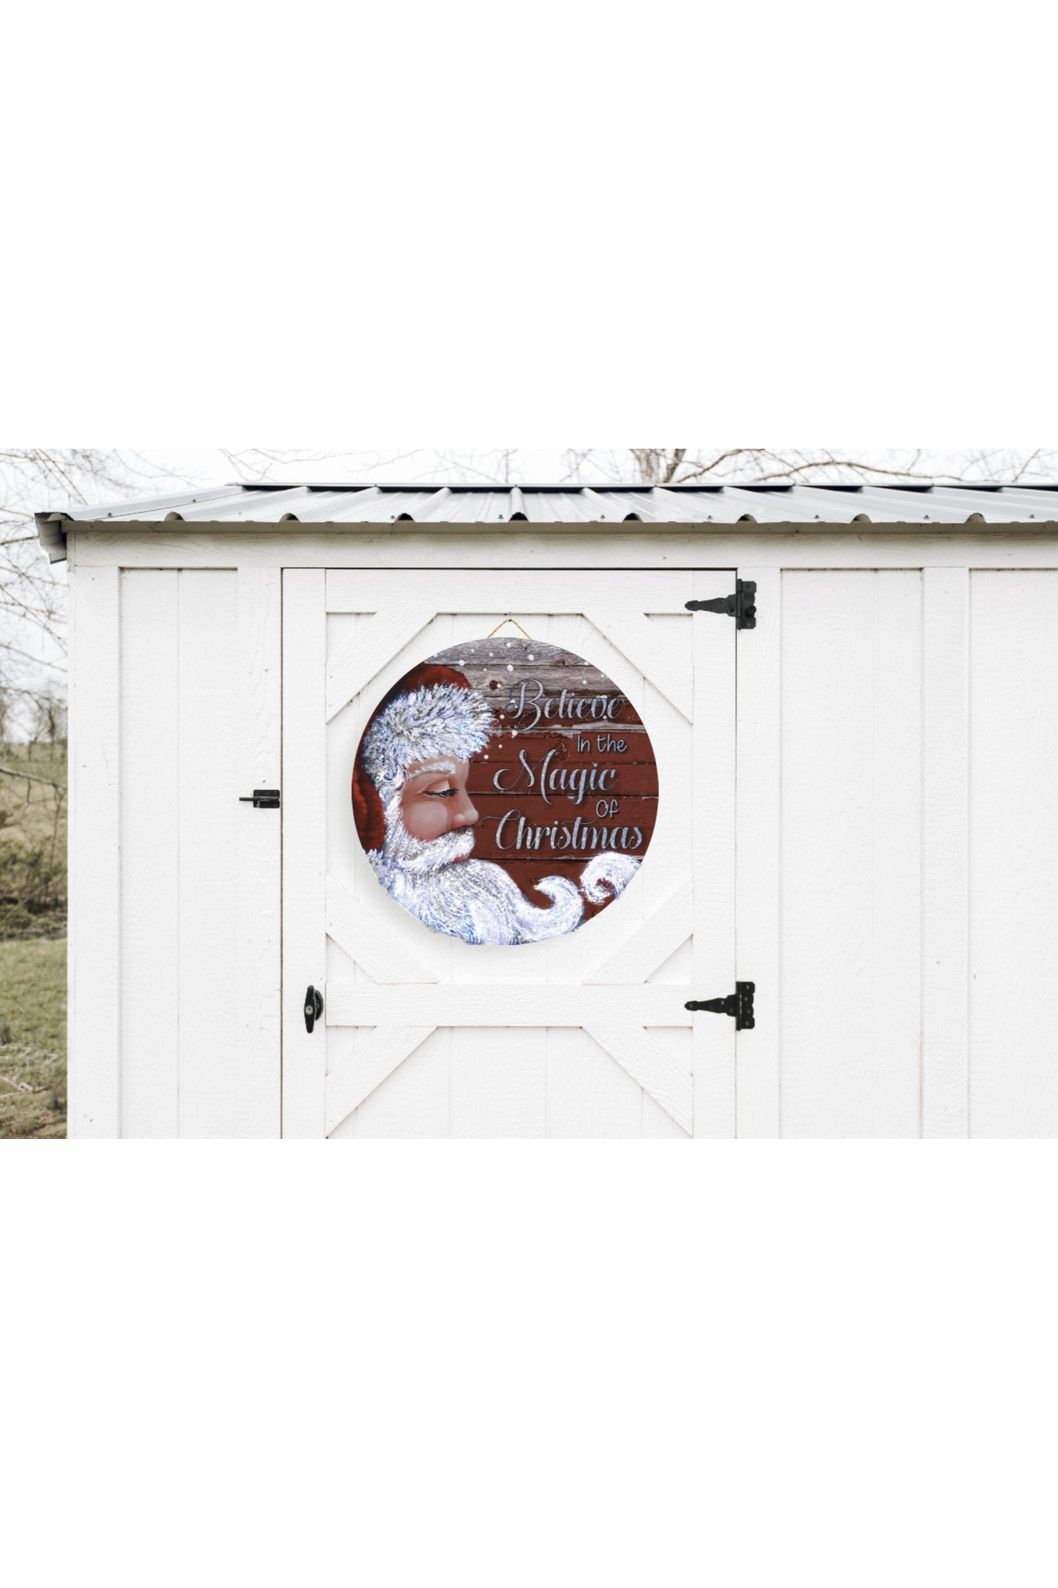 Shop For Believe In the Magic Santa Claus Sign - Wreath Enhancement